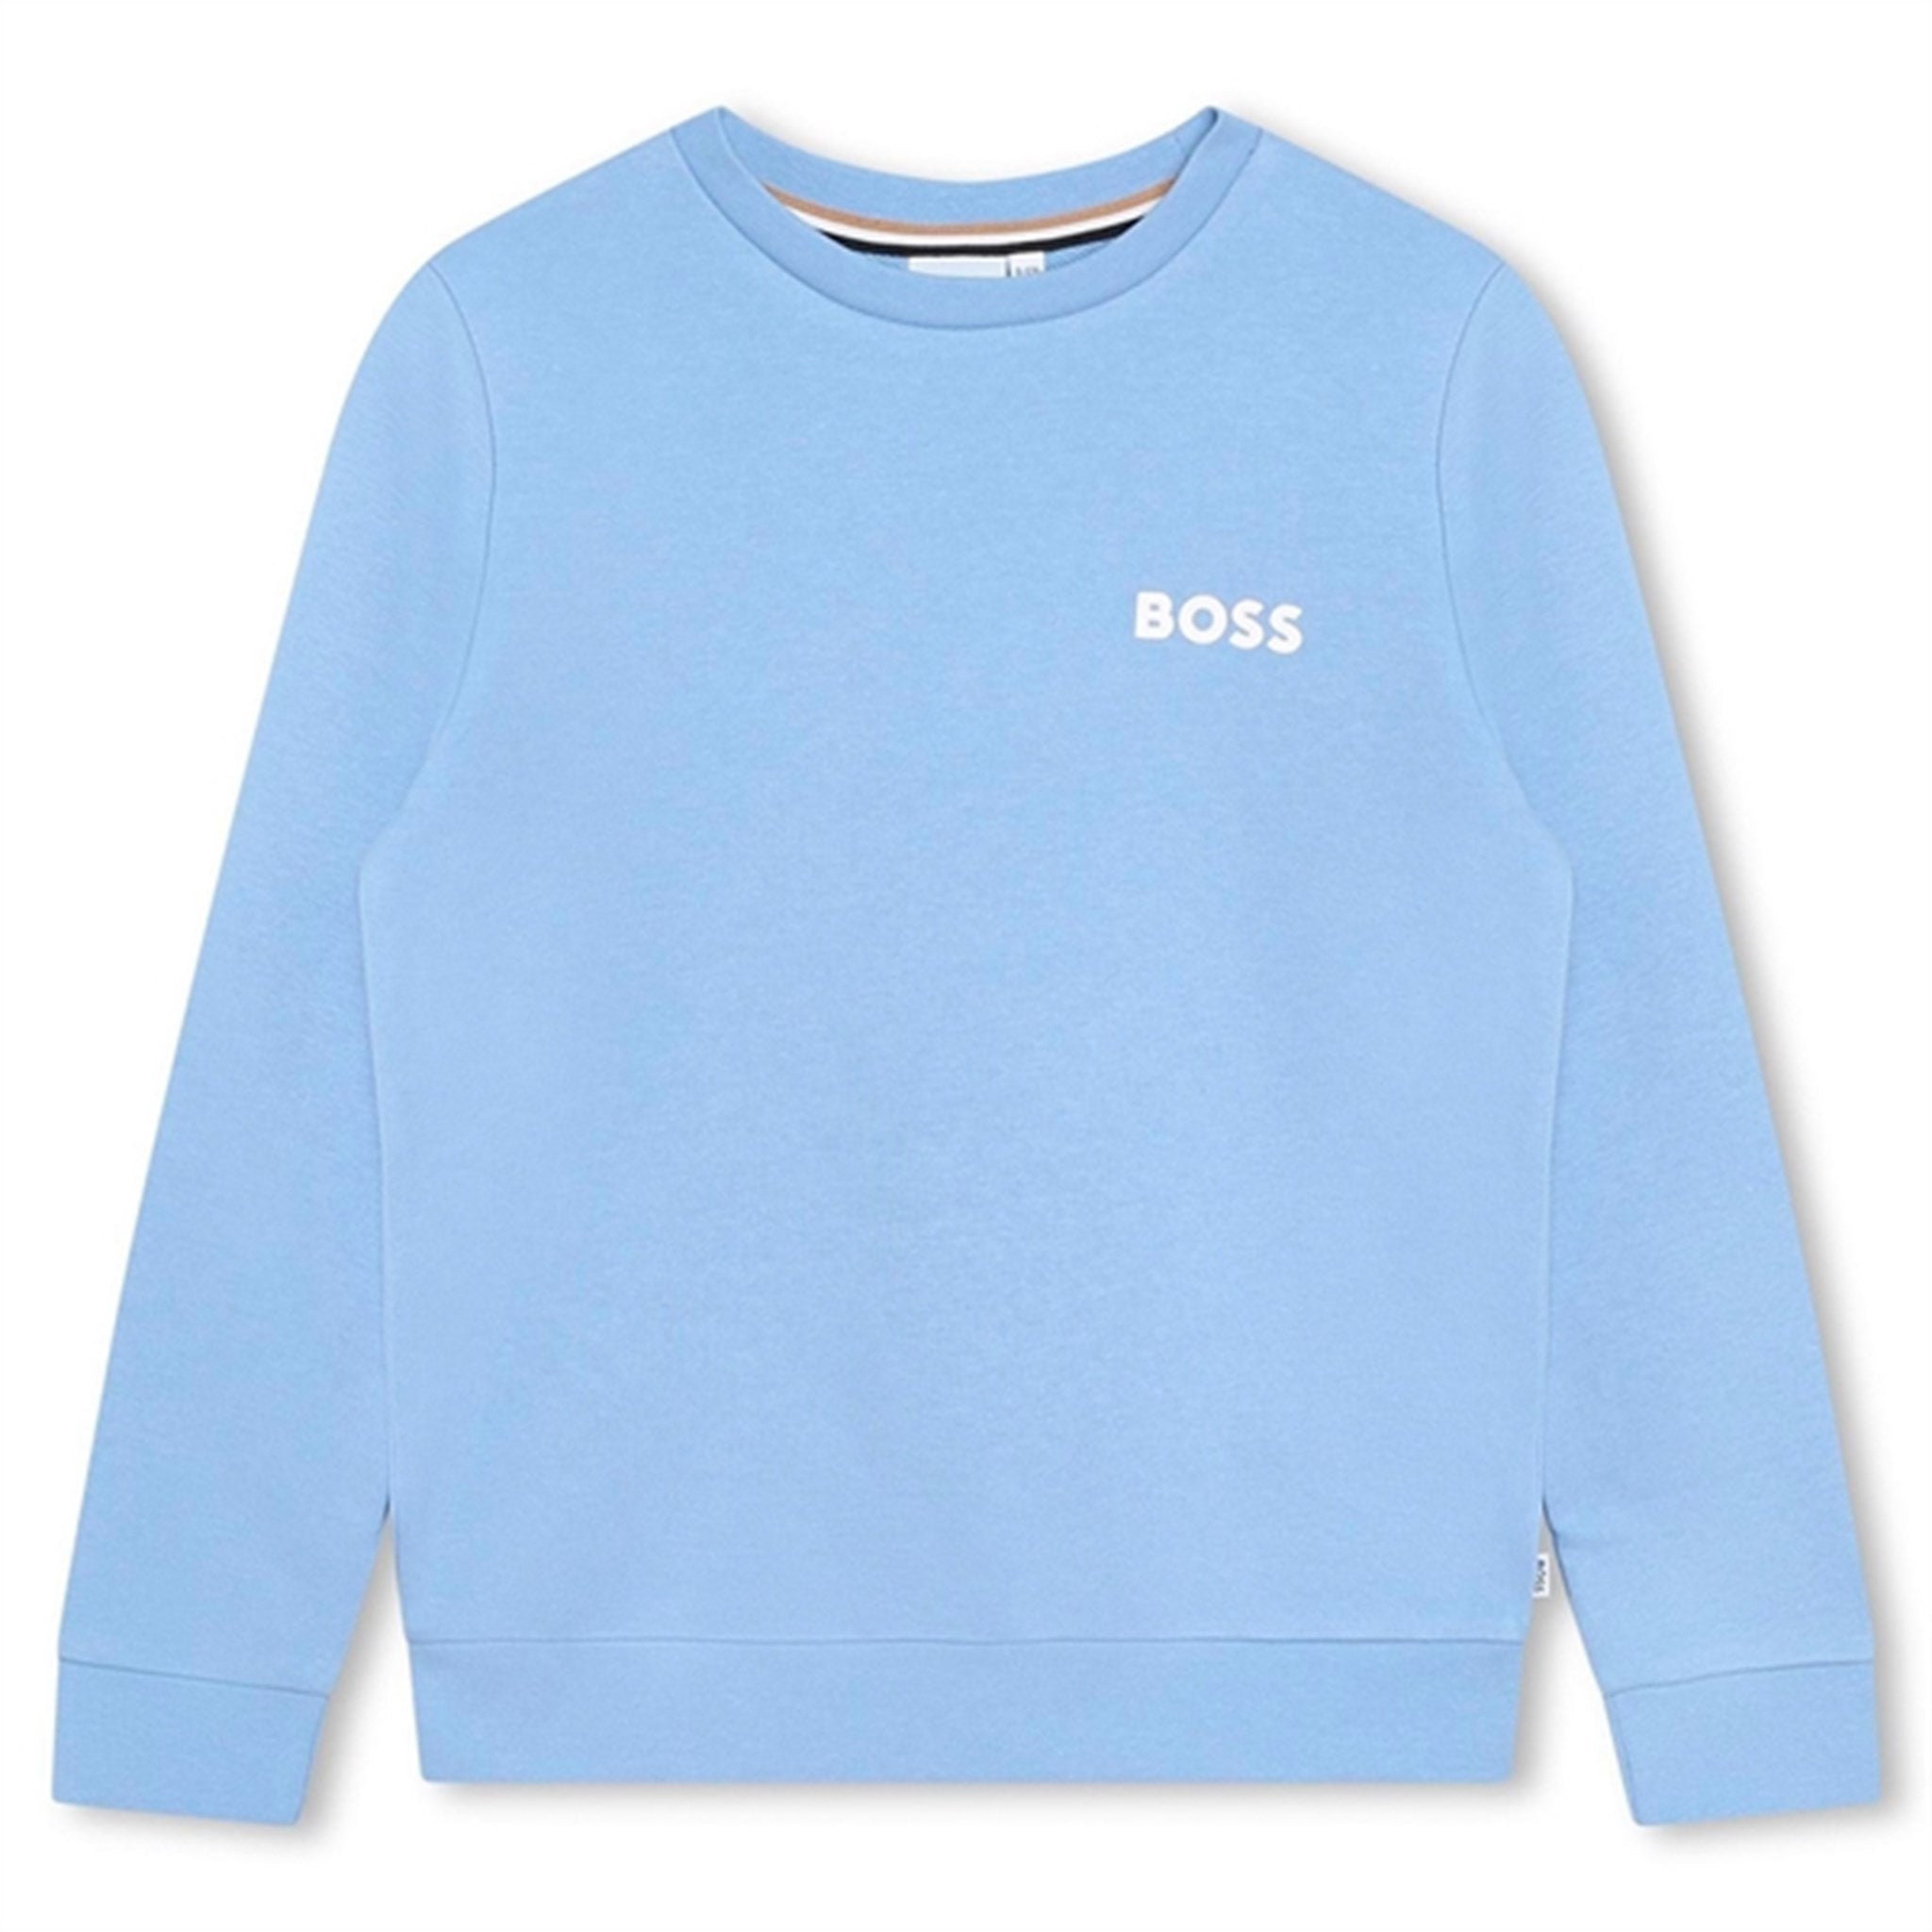 Hugo Boss Sweatshirt Pale Blue